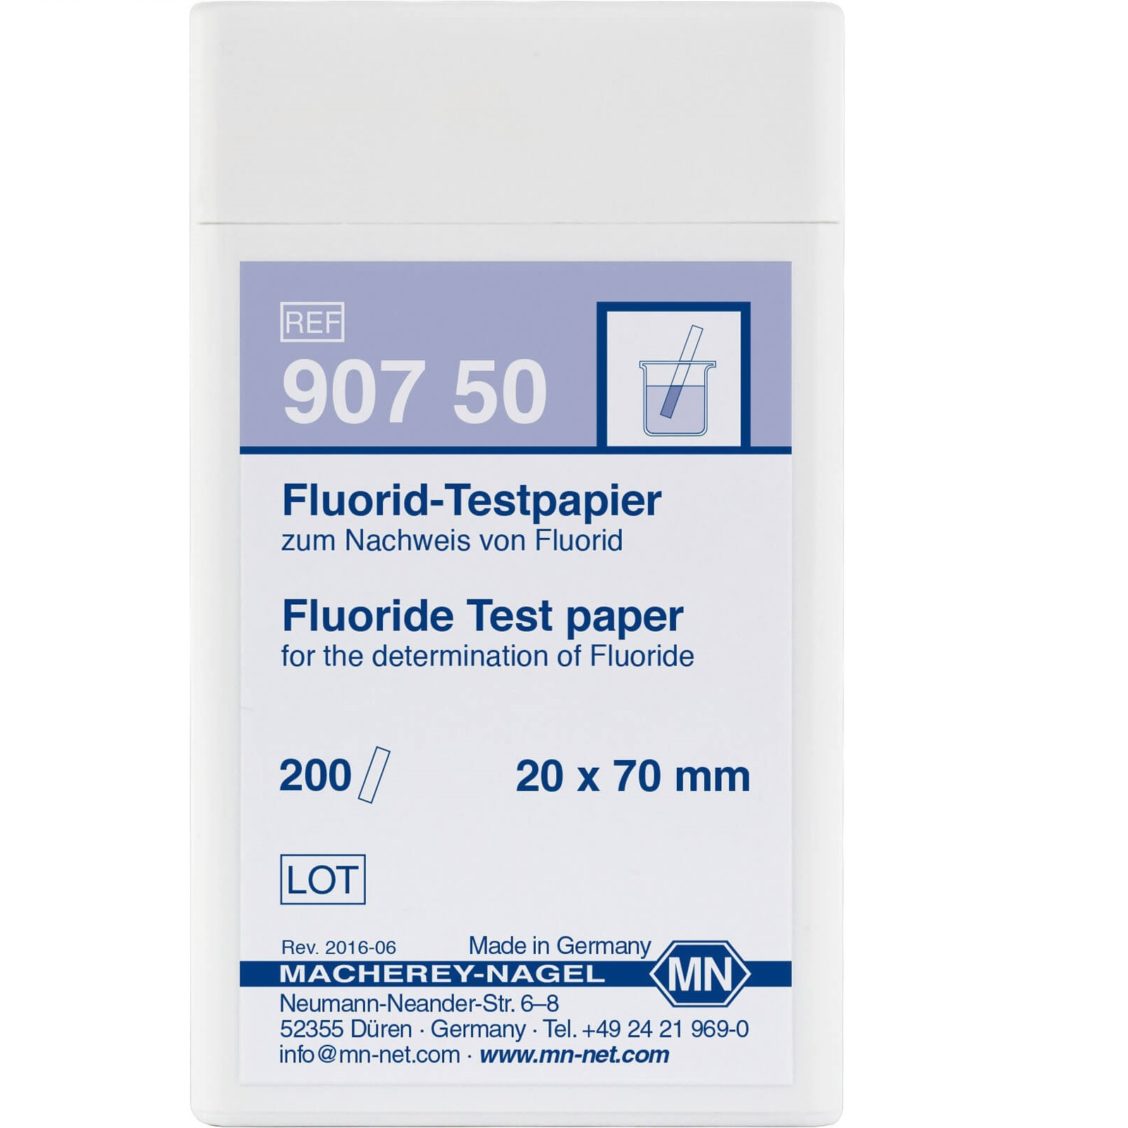 MN 90750 fluorid testpapir